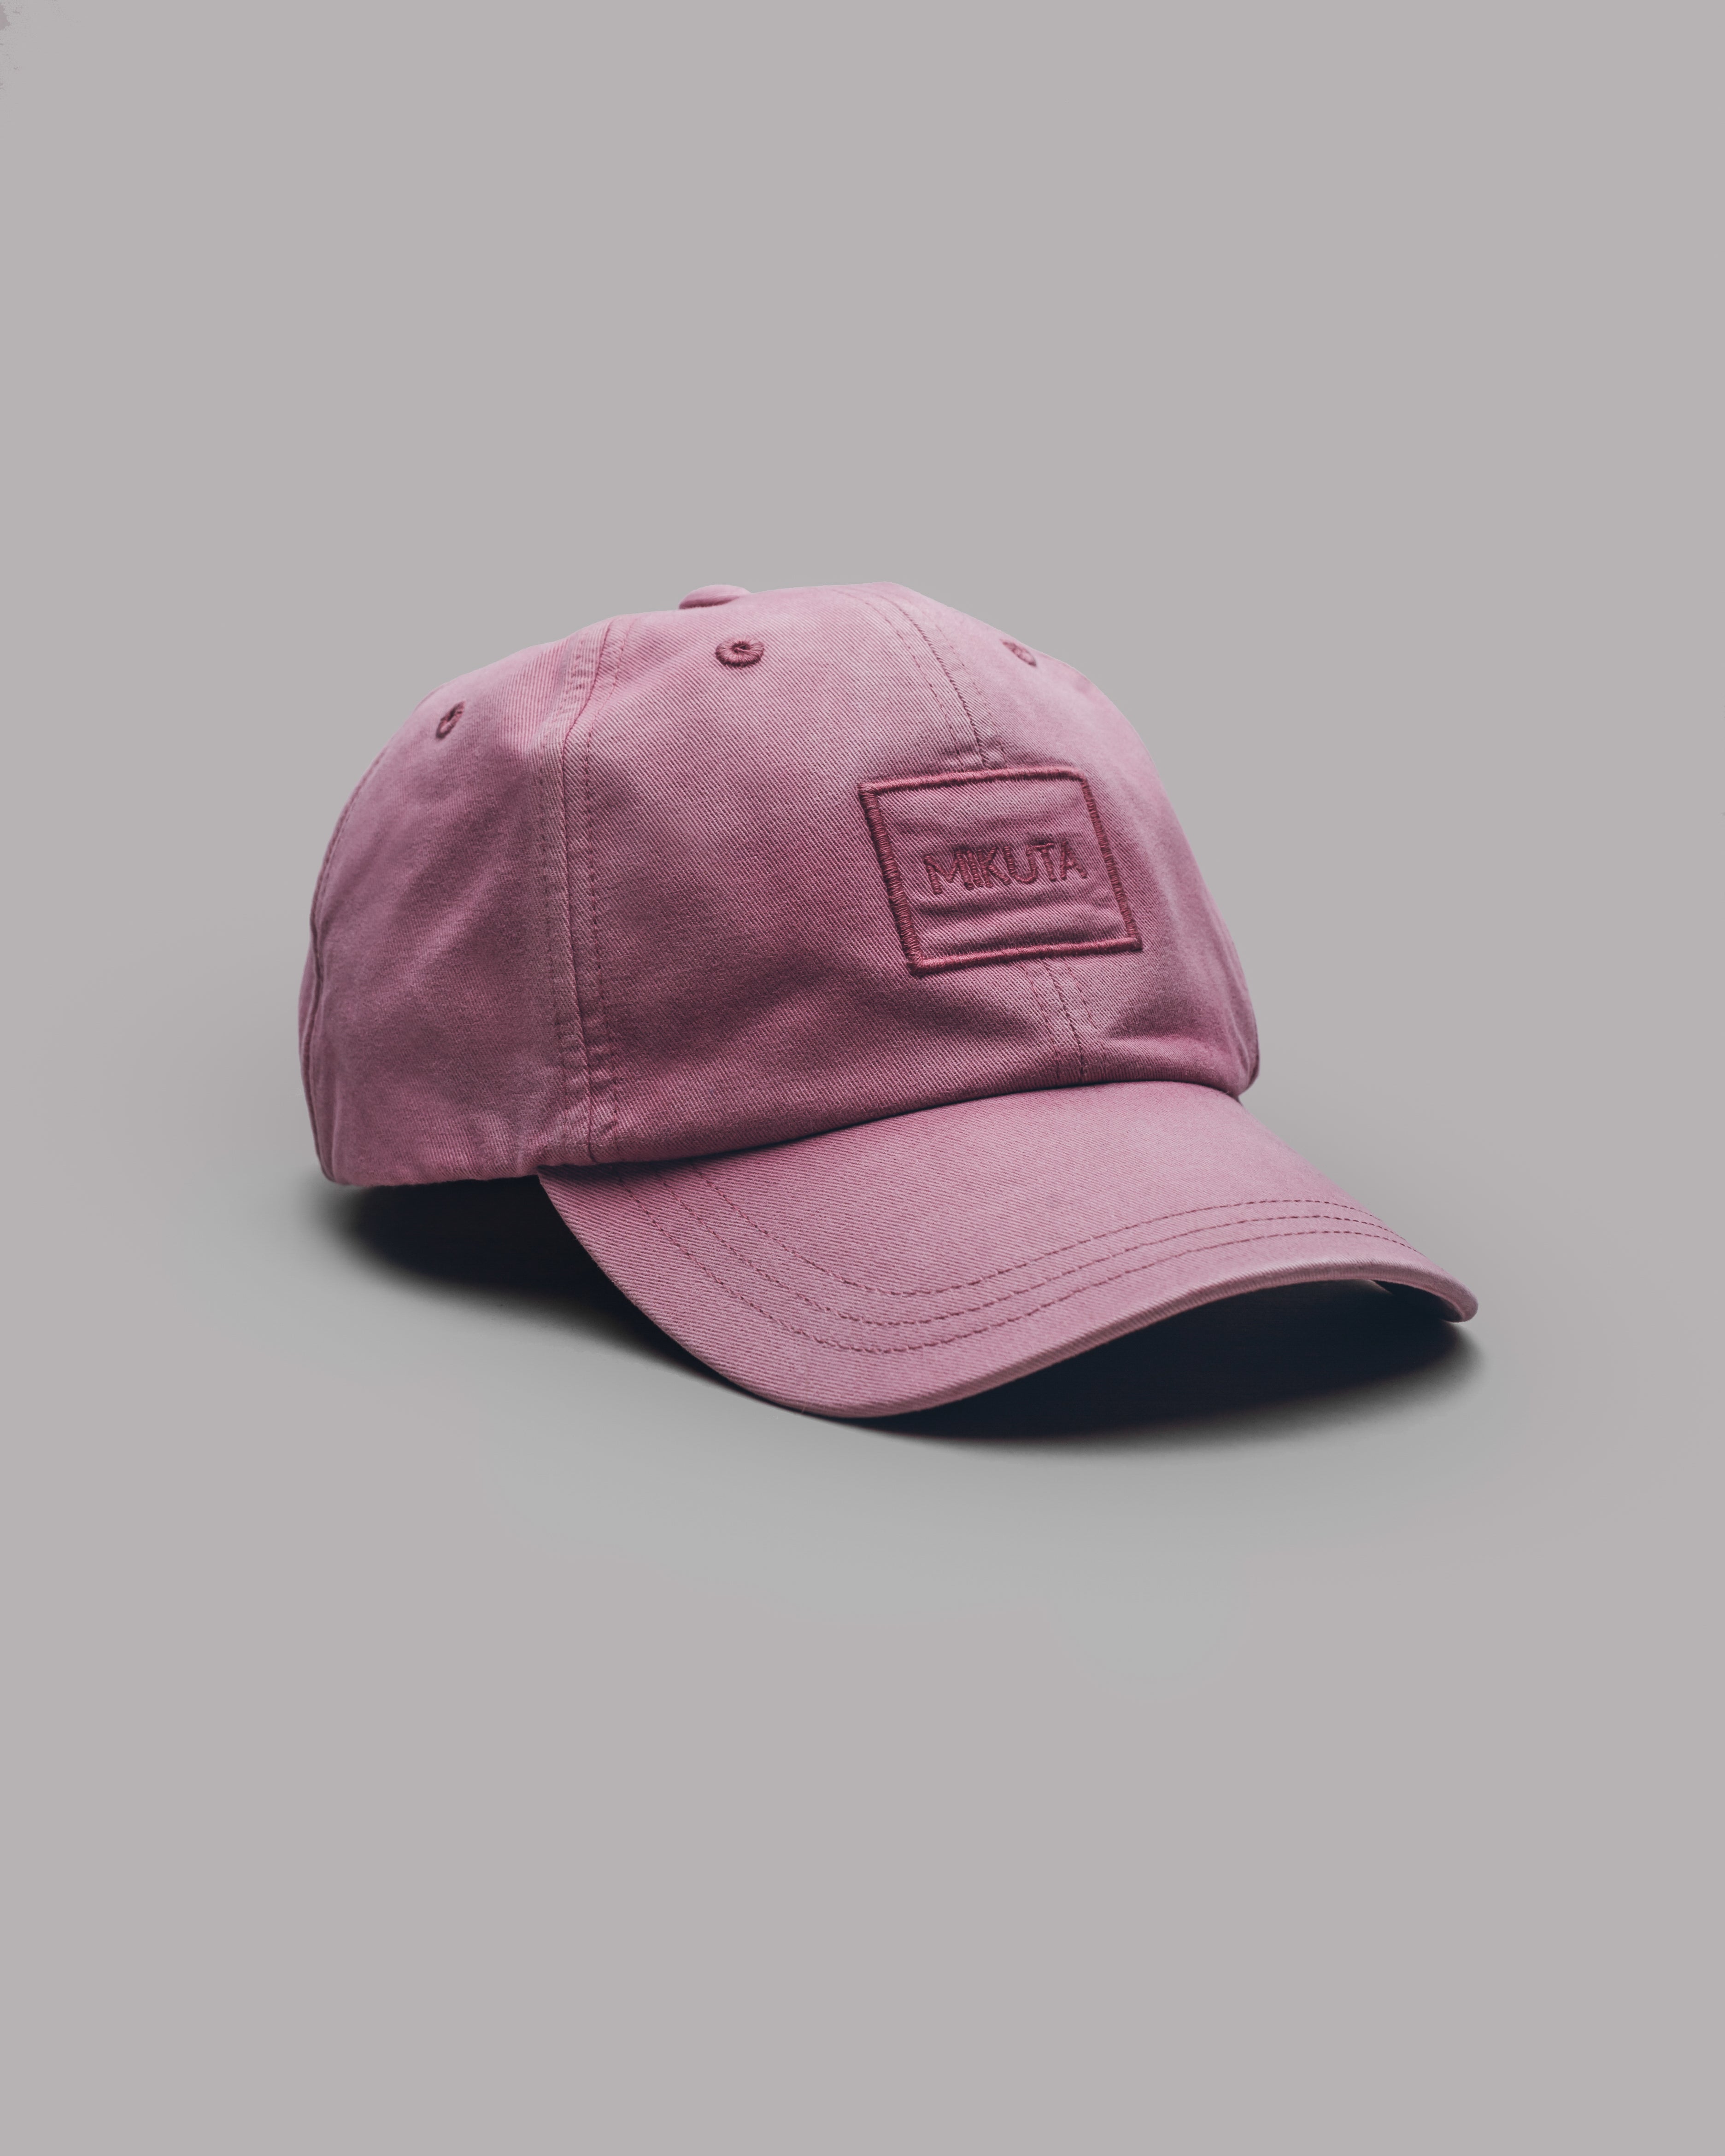 The Pink Base Cap